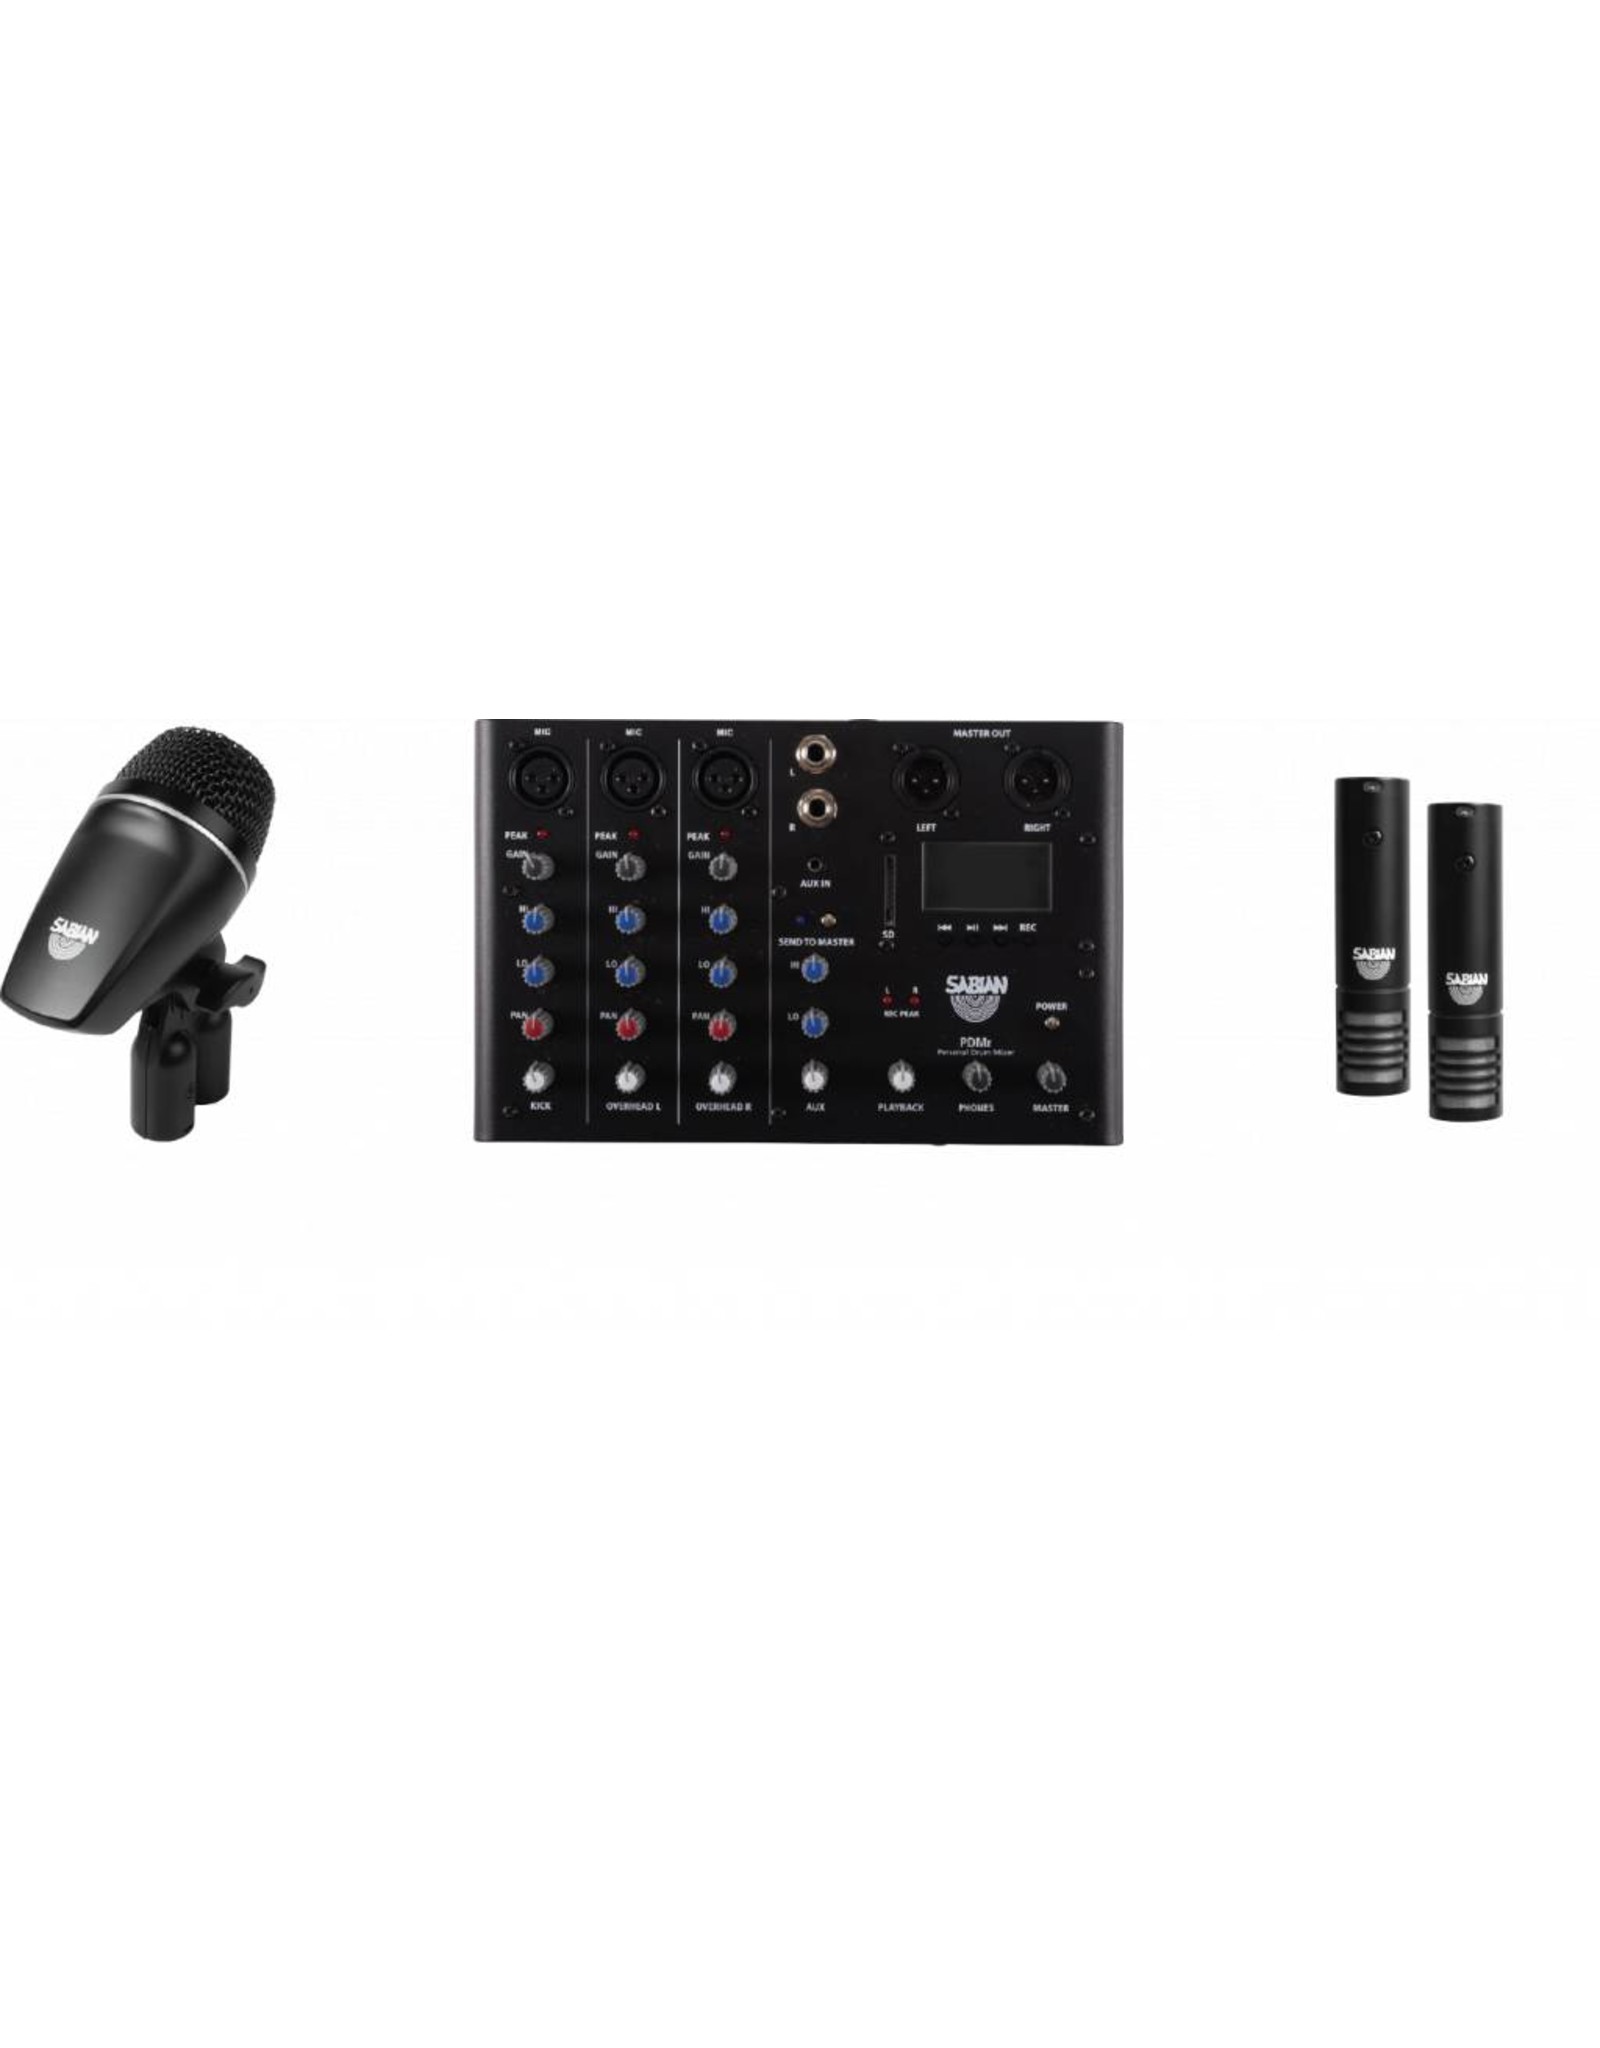 Sabian PSA SSKIT drum microphone mixer, recording kit